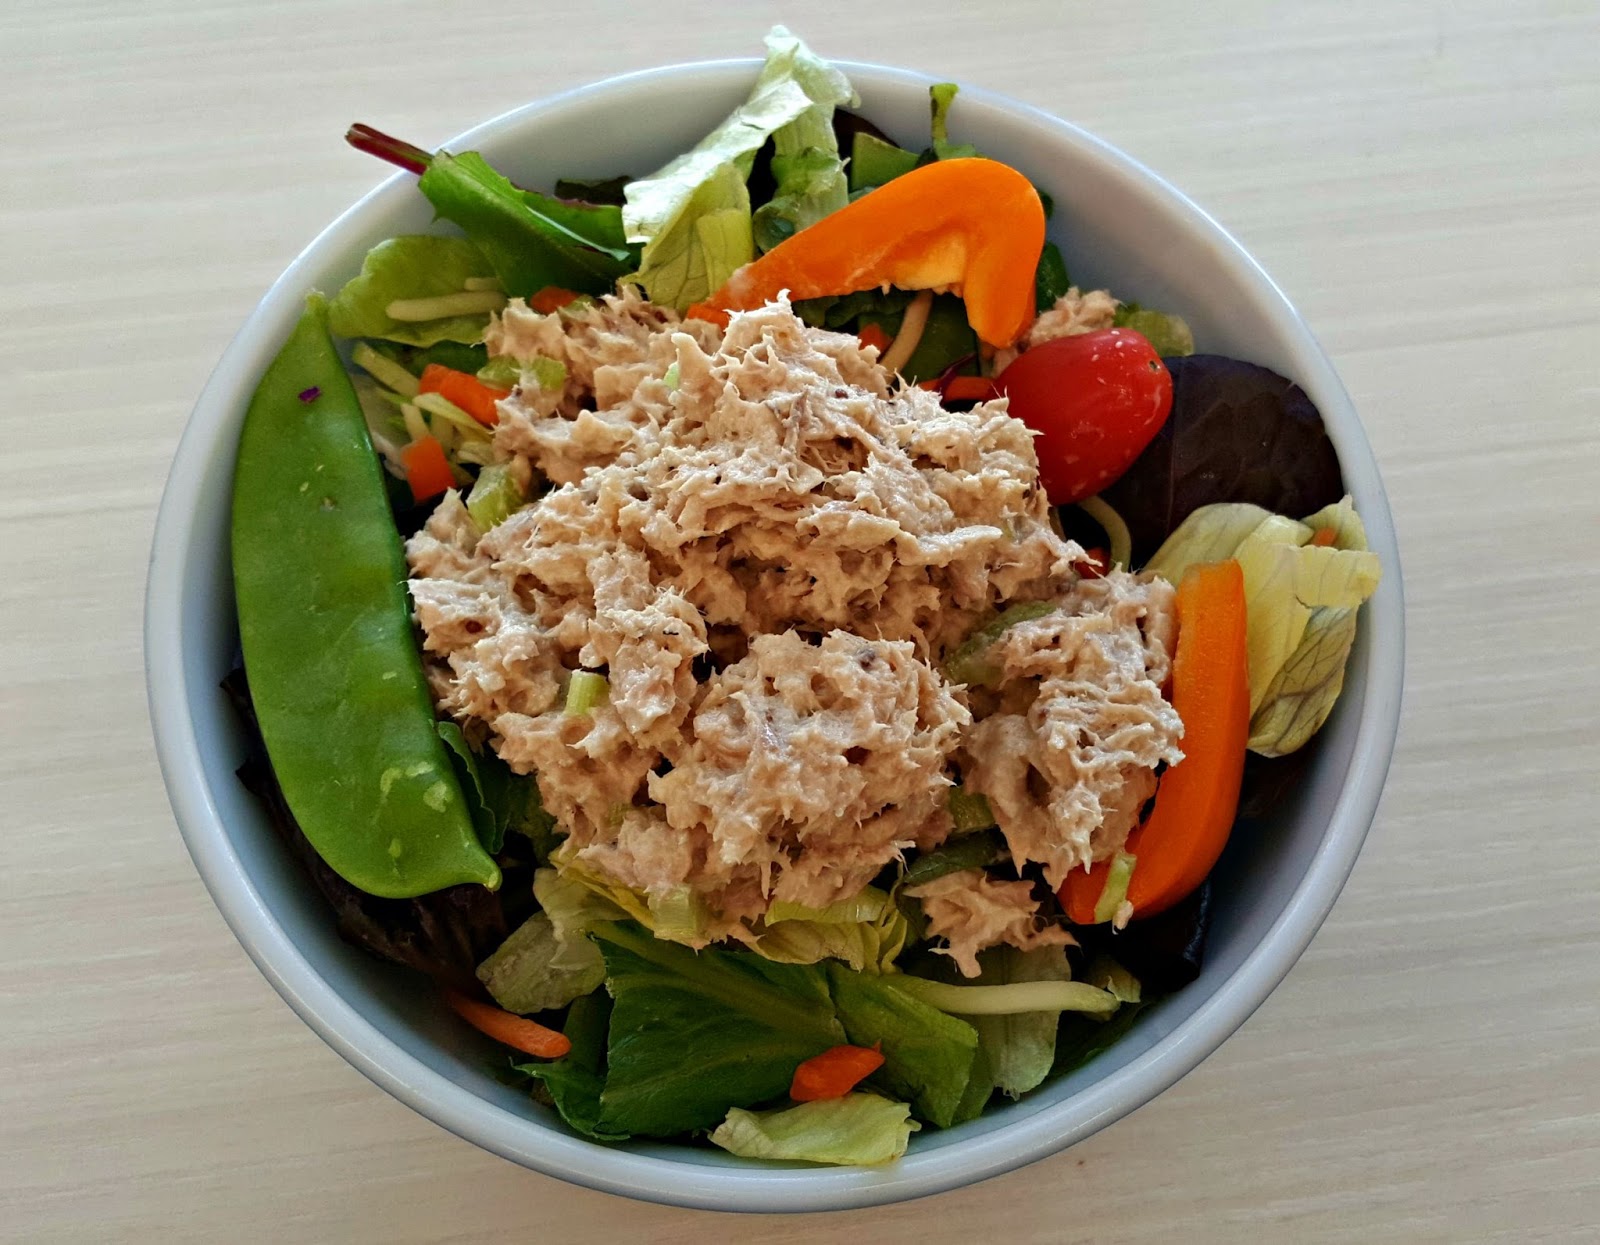 Mami Eggroll Garden Salad Topped With Tuna Fish Salad